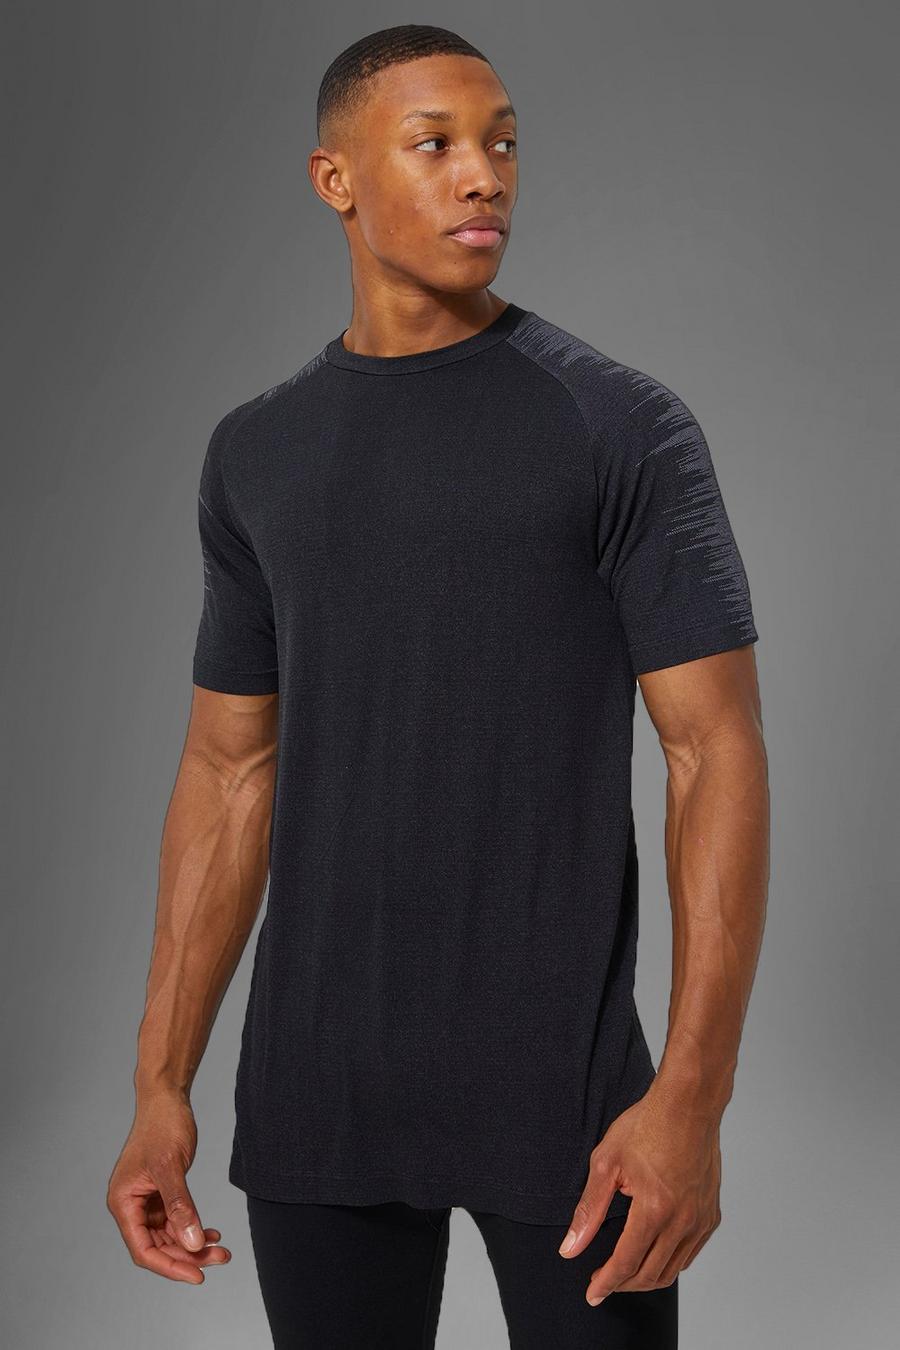 T-shirt Man Active senza cuciture con strisce laterali, Black negro image number 1